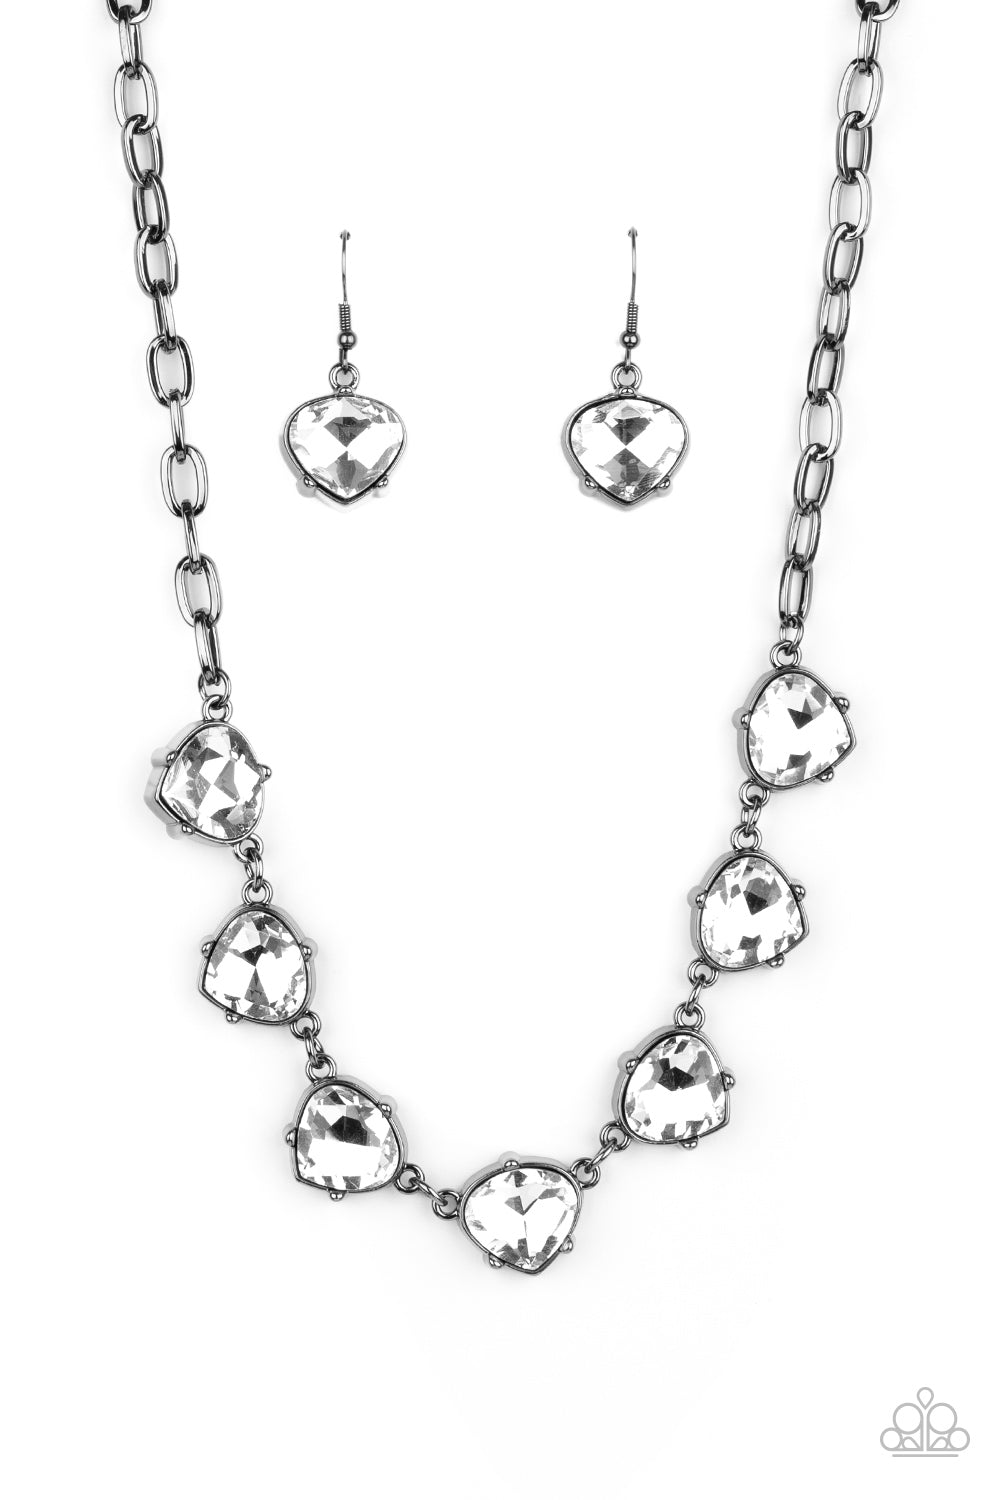 Paparazzi Accessories - Star Quality Sparkle - Black Necklaces